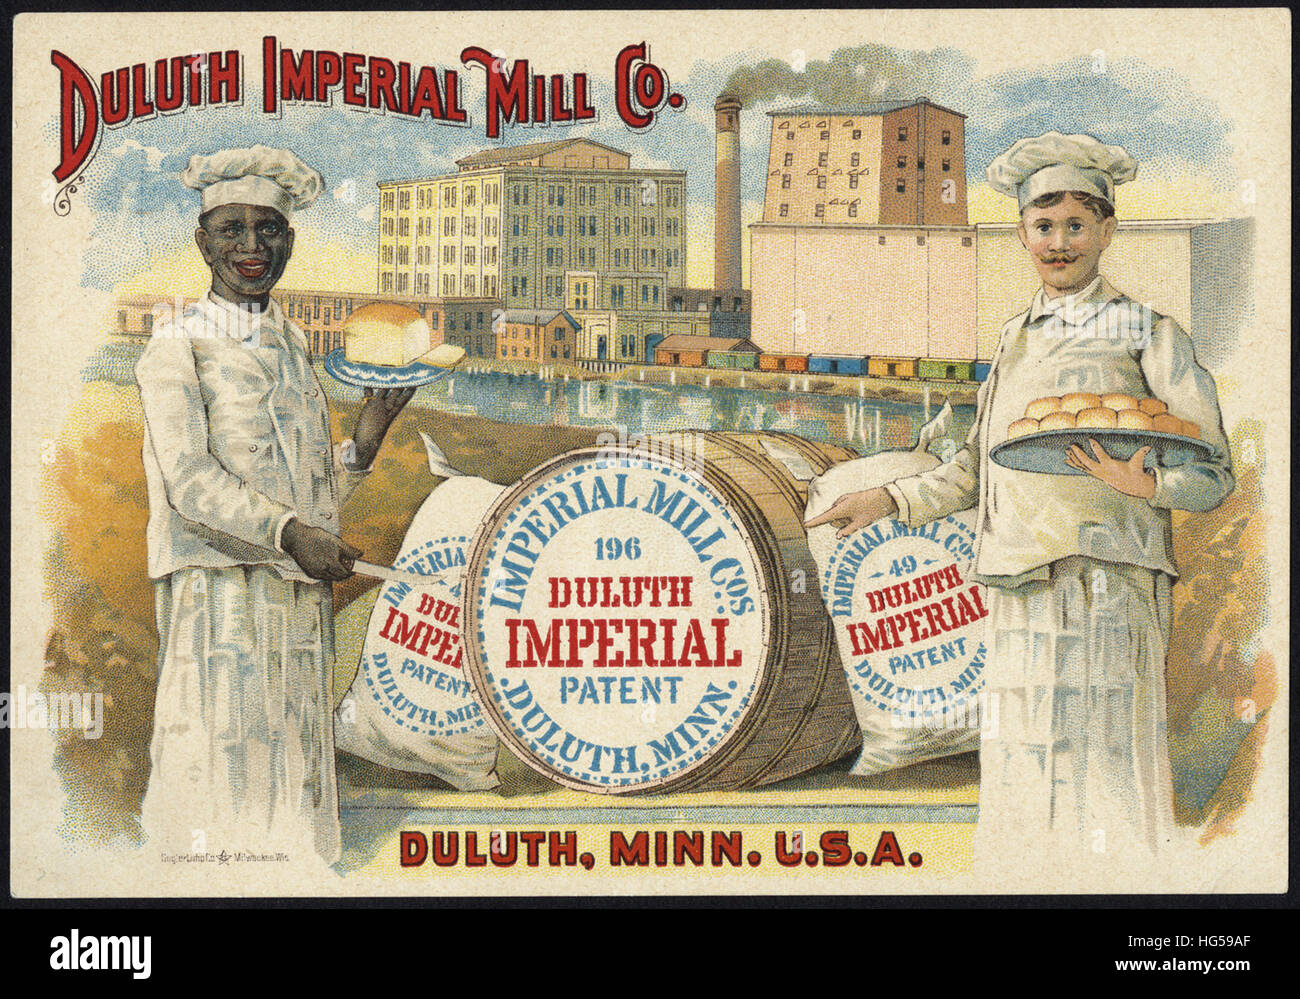 Handel-Karte - Duluth Imperial Mill Co. - Backen macht die besten bread  Stockfoto